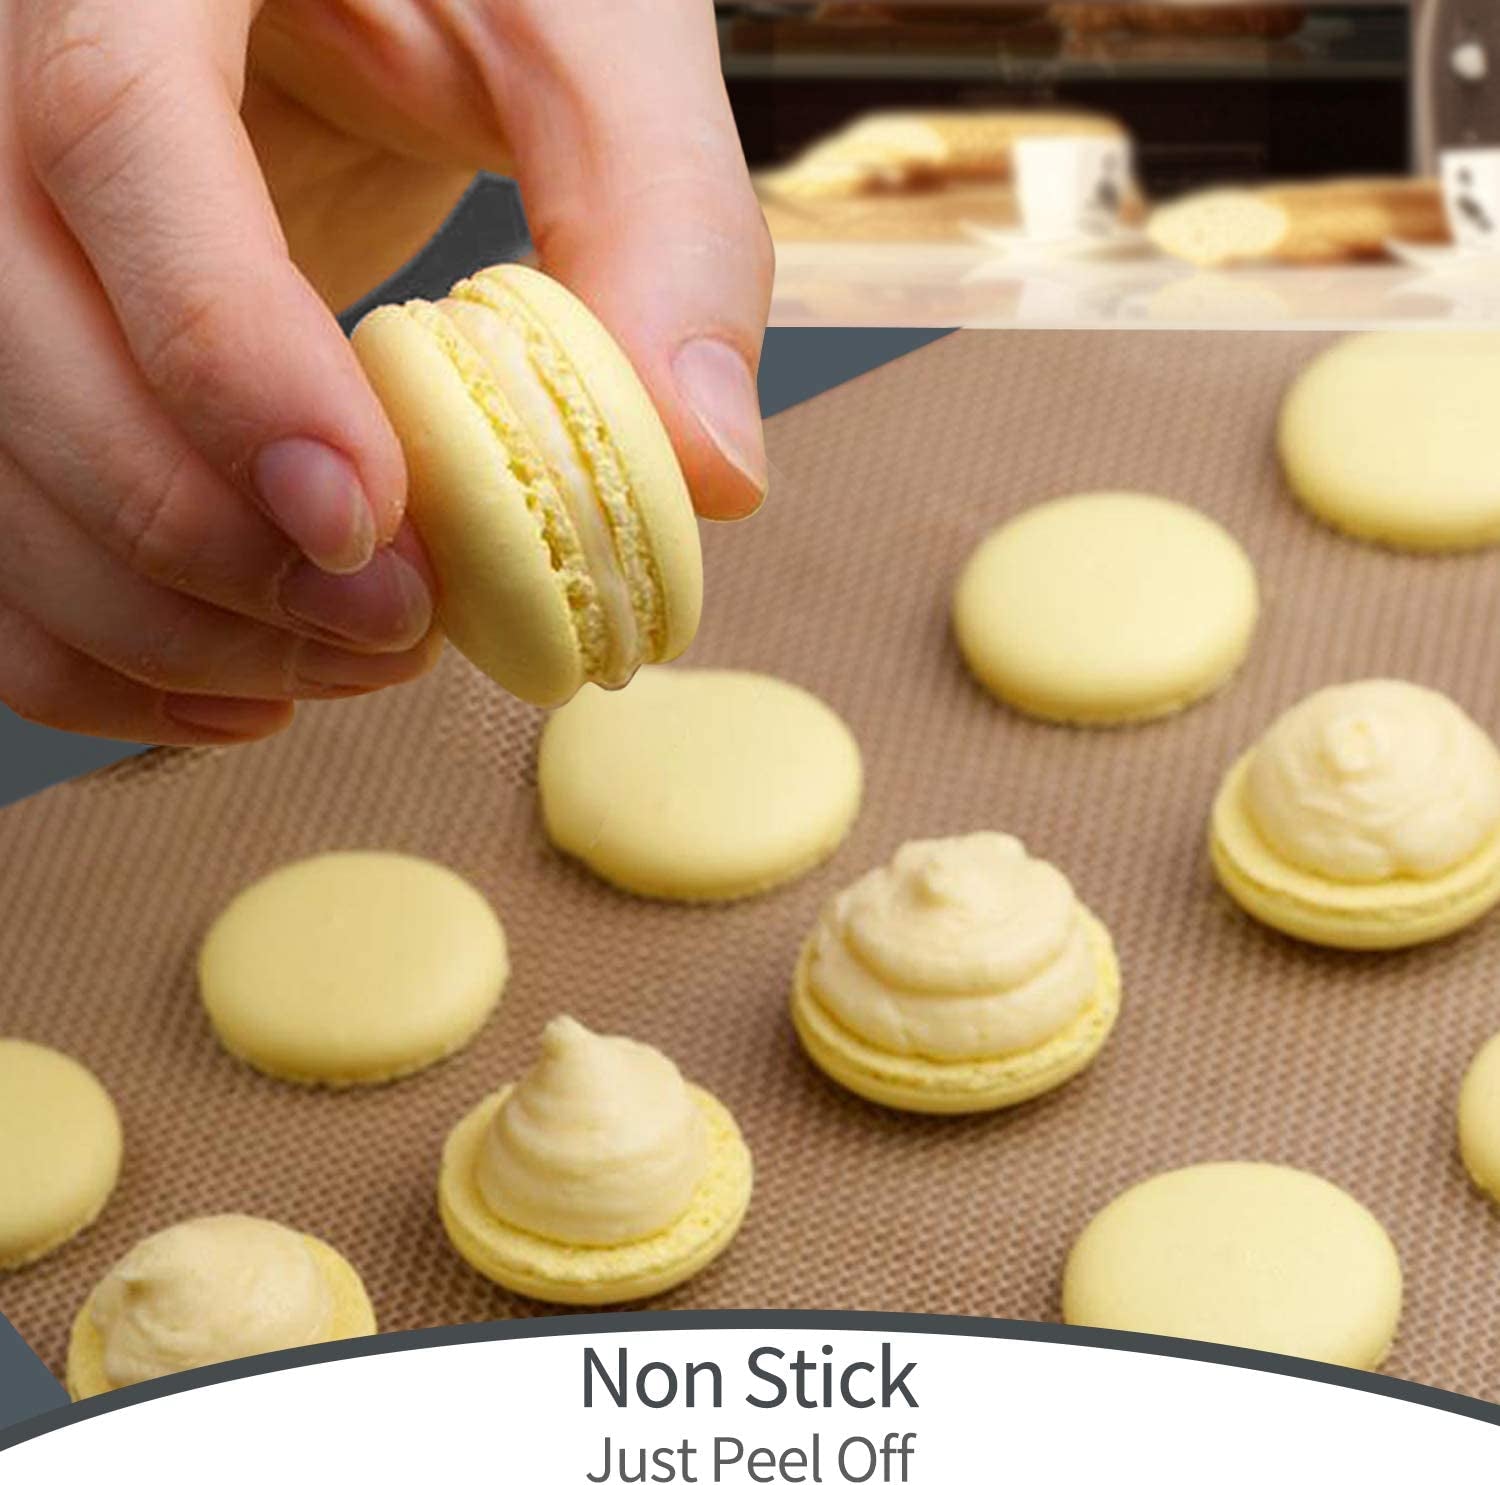 Silicone Baking Mats - Set of 2 Non-Slip Washable Reusable Baking Tray, Heat-Resistant Cooking Bakeware Mat, BPA Free (Gray)